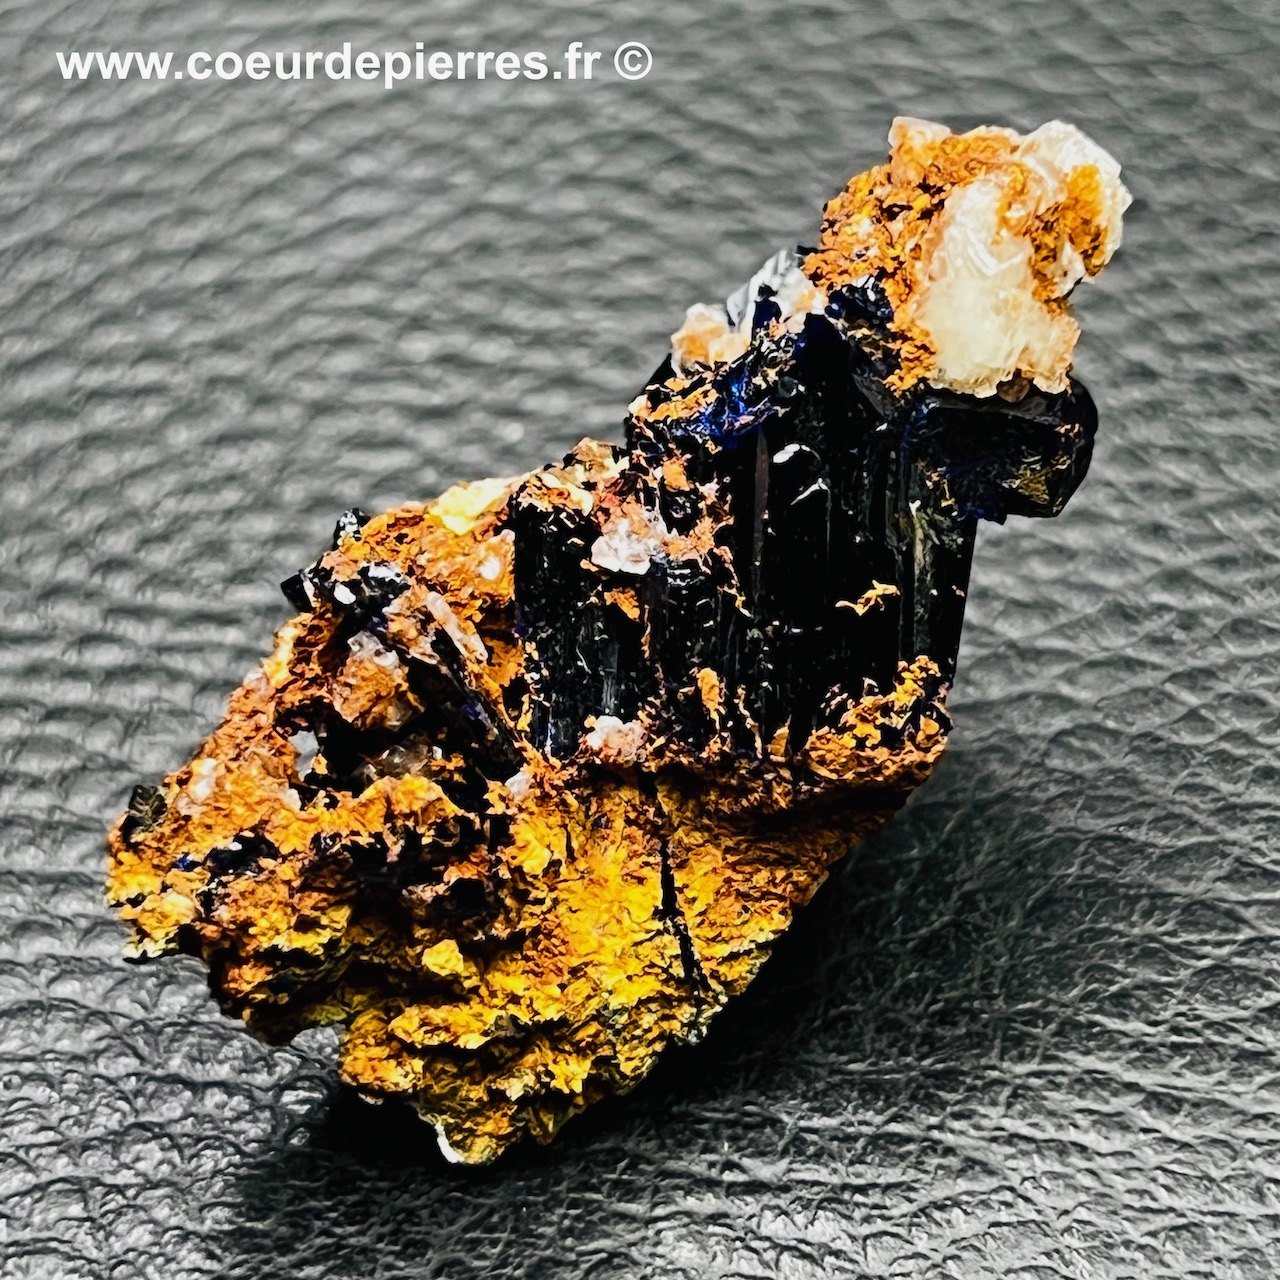 Azurite cristallisé du Maroc (réf azm26)